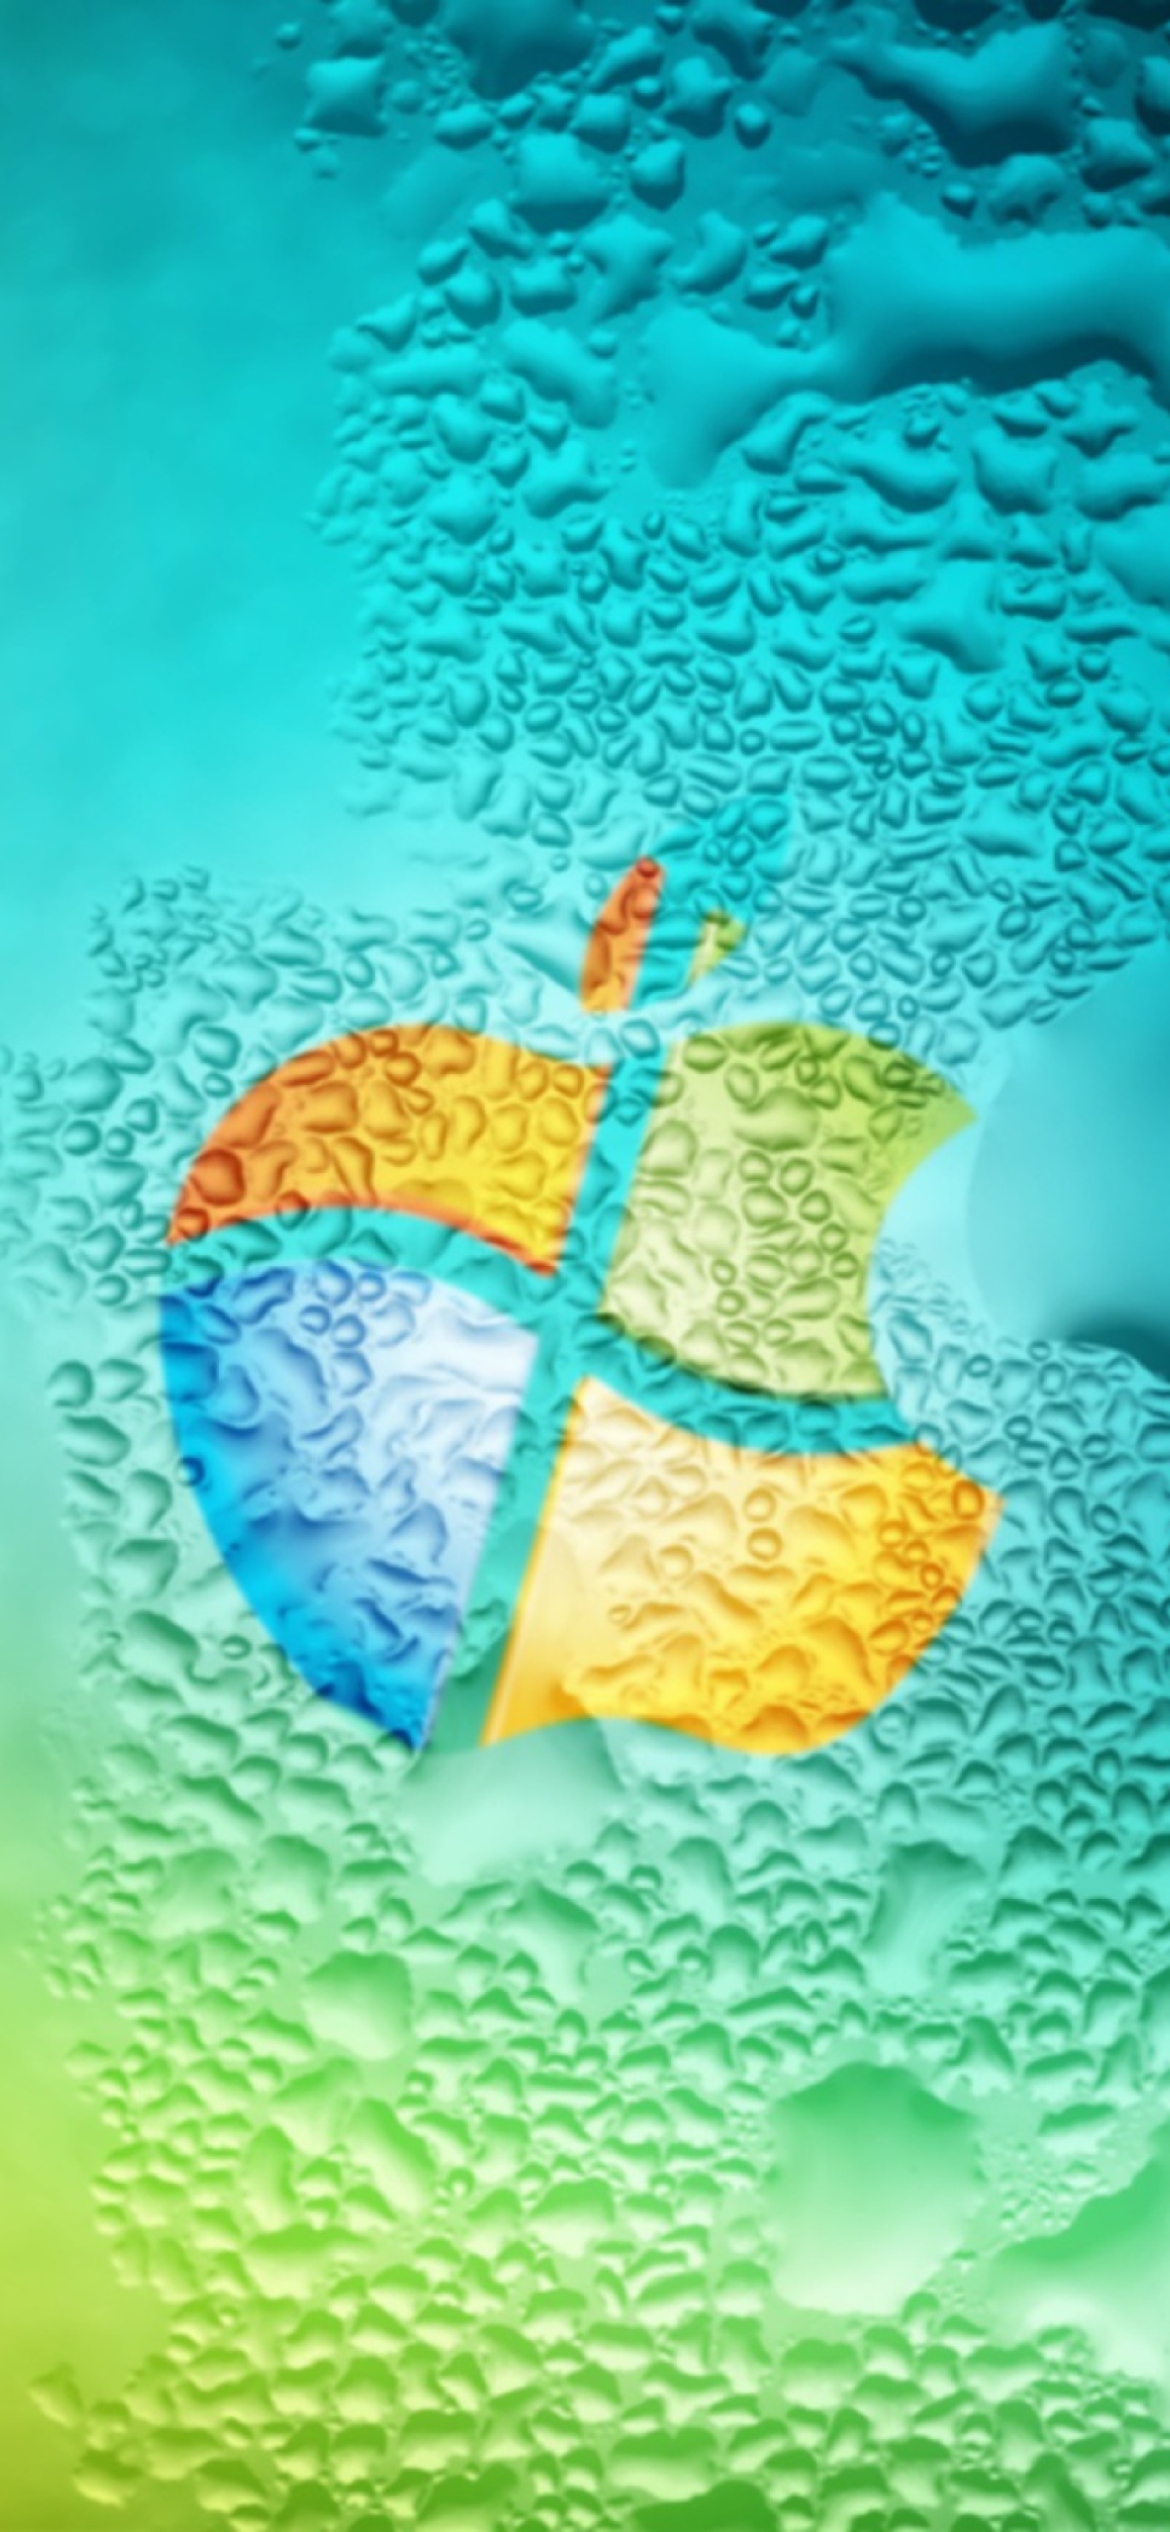 Apple And Windows wallpaper 1170x2532